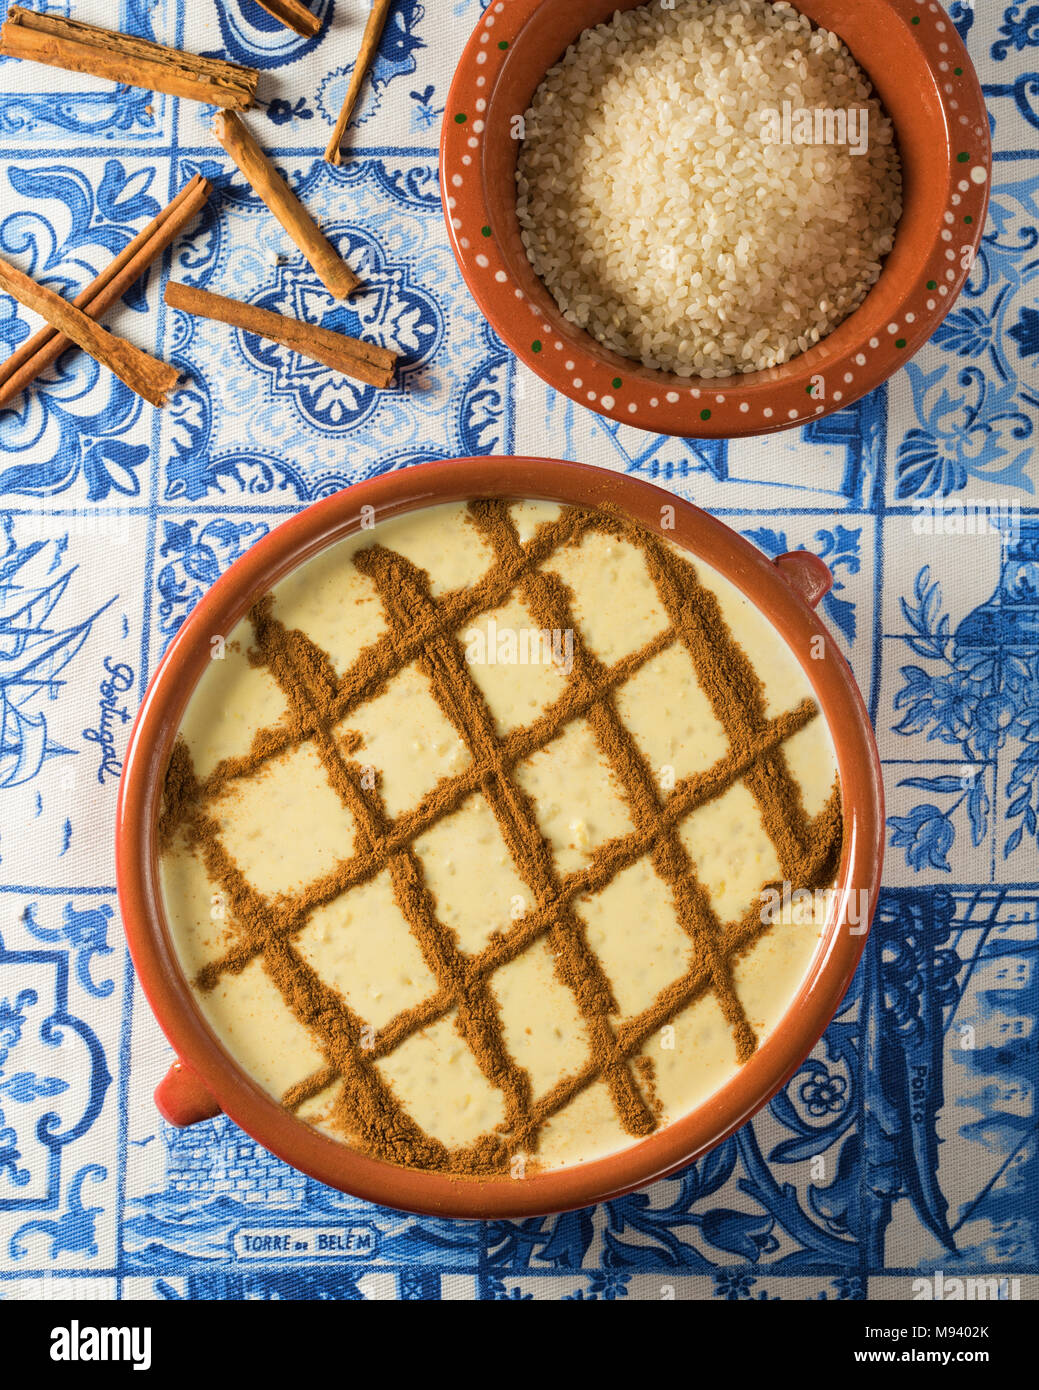 Arroz doce. Portuguese rice pudding. Portugal Food Stock Photo - Alamy